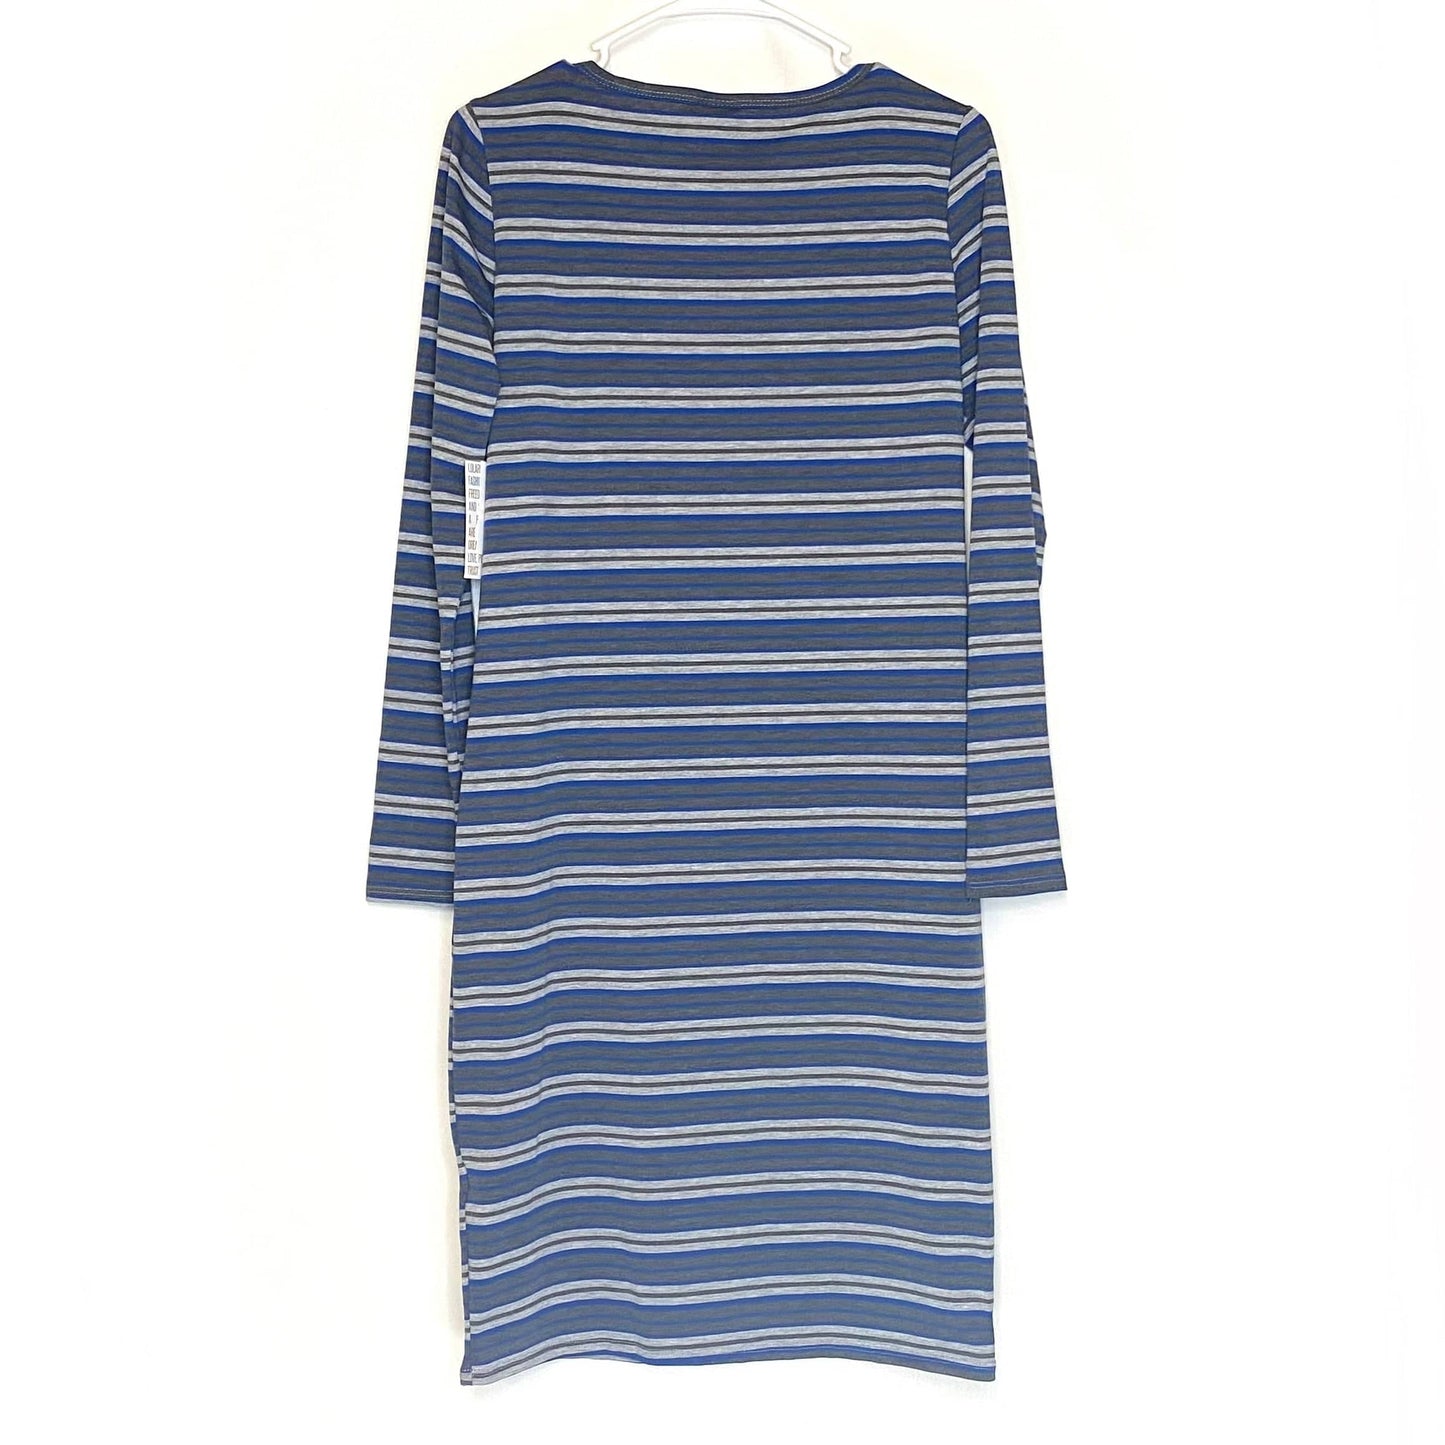 LuLaRoe Womens M ‘Debbie’ Blue/Gray Balanced Stripes L/s Sheath Dress NWT